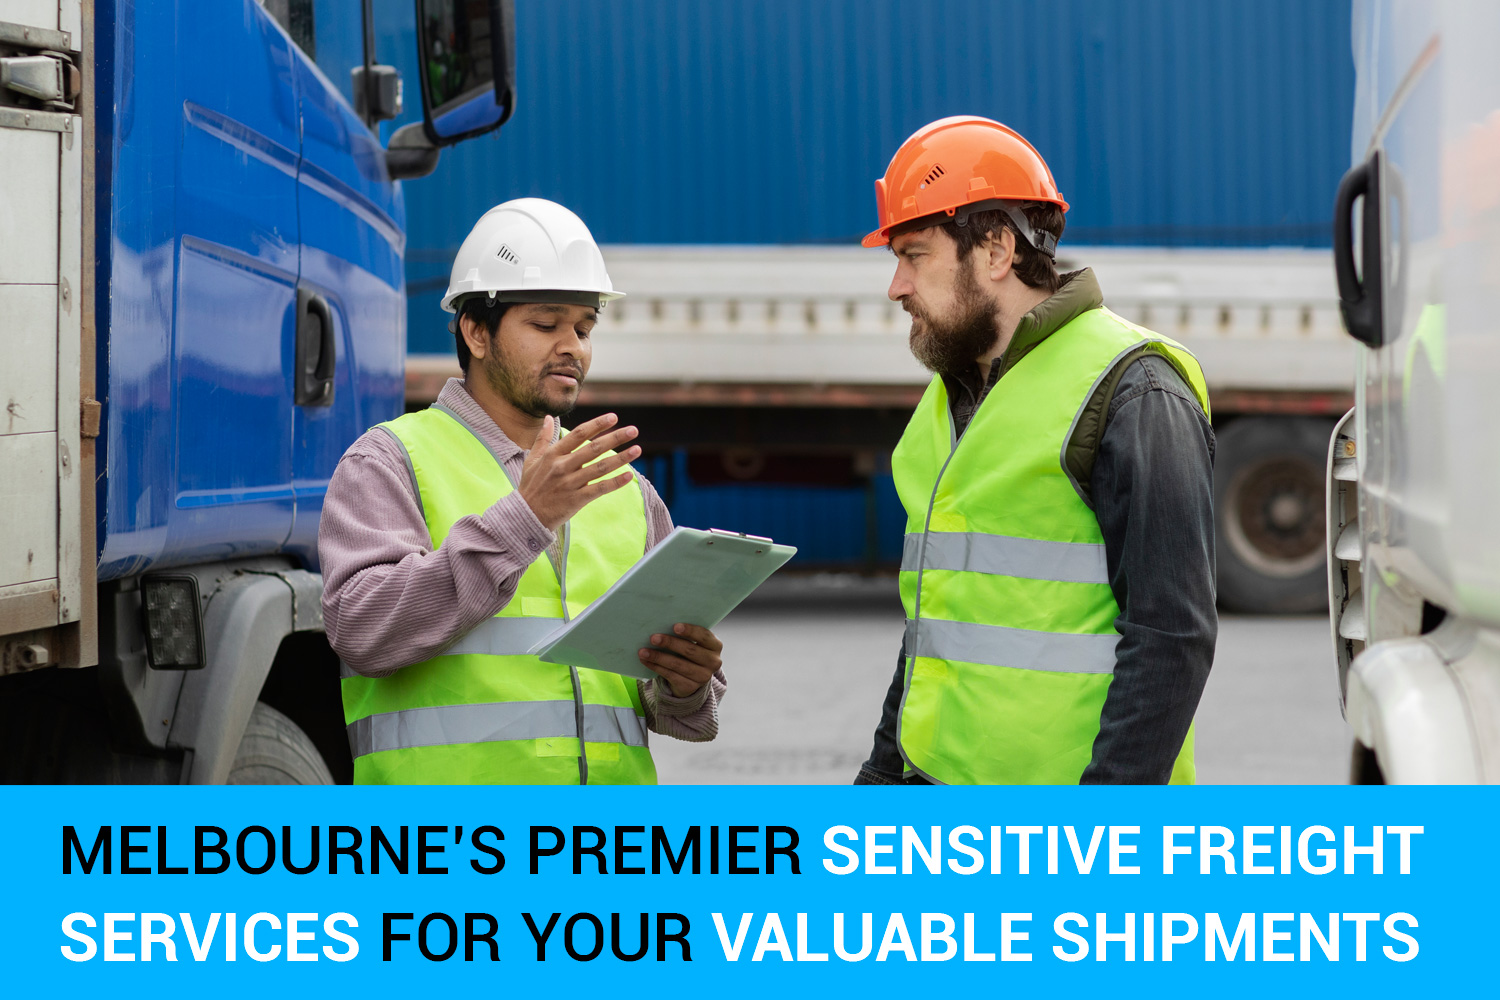 Premier Sensitive Freight Services for Your Valuable Shipments